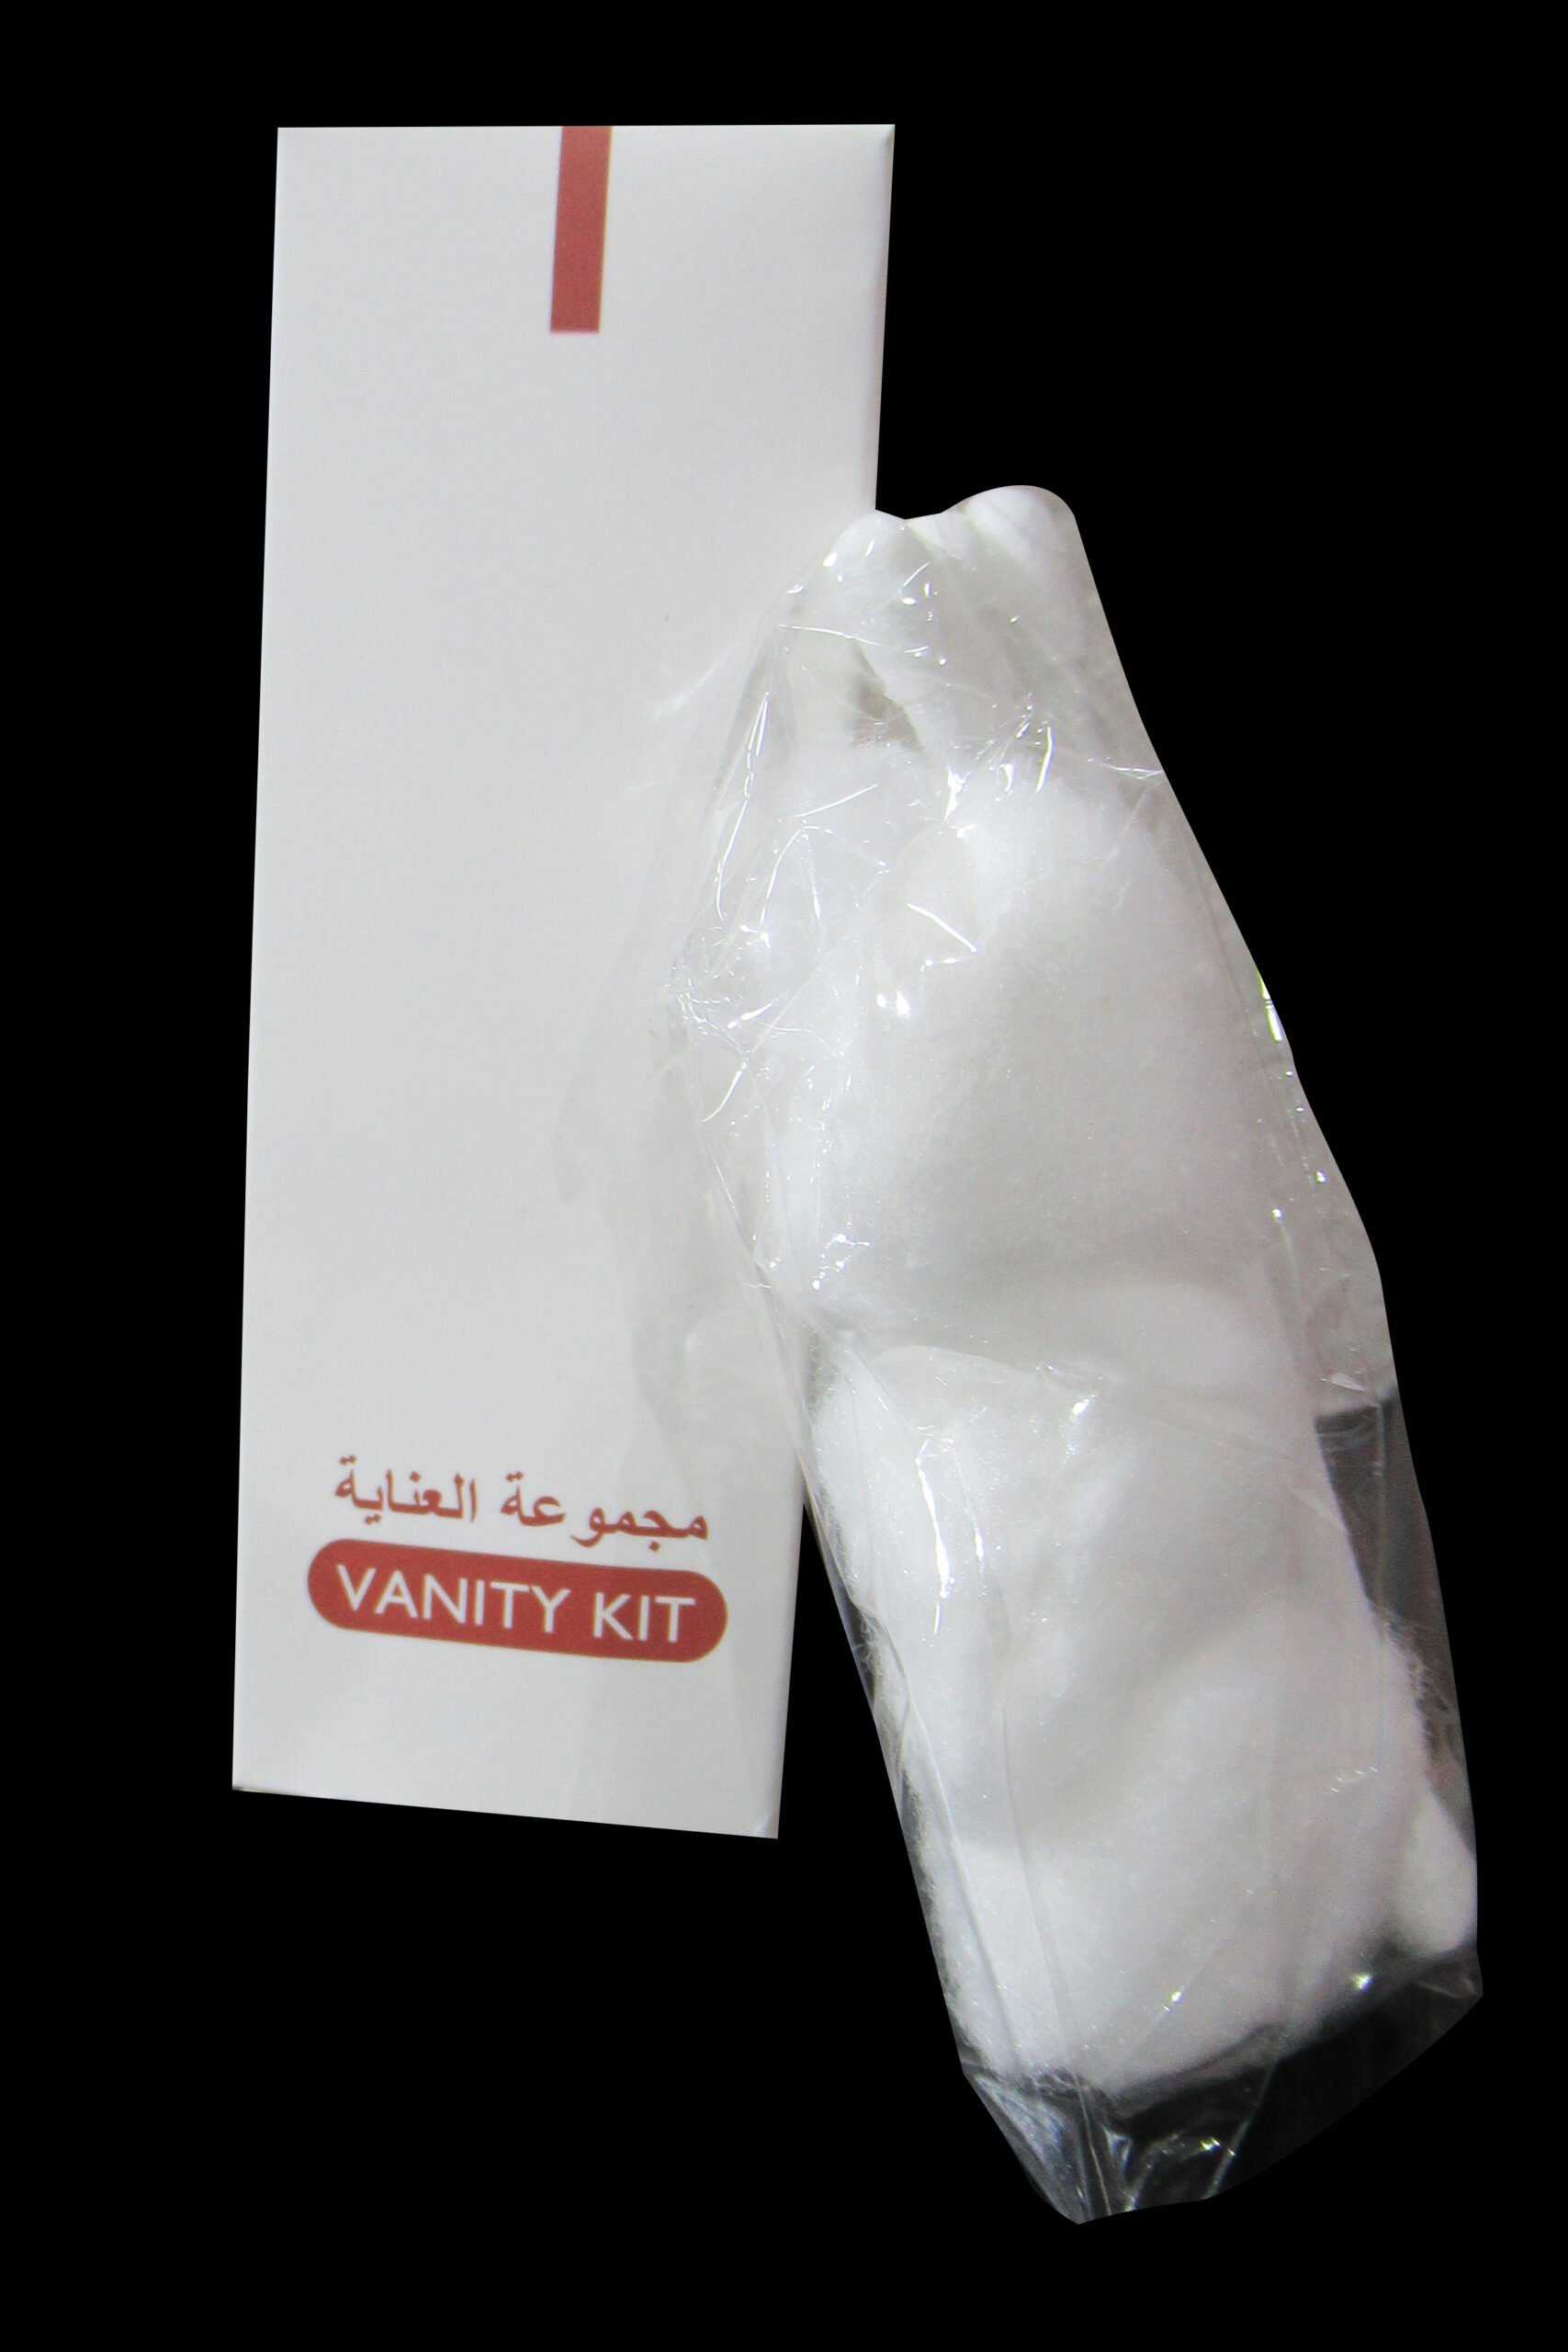 Vanity Kit 1 1 scaled